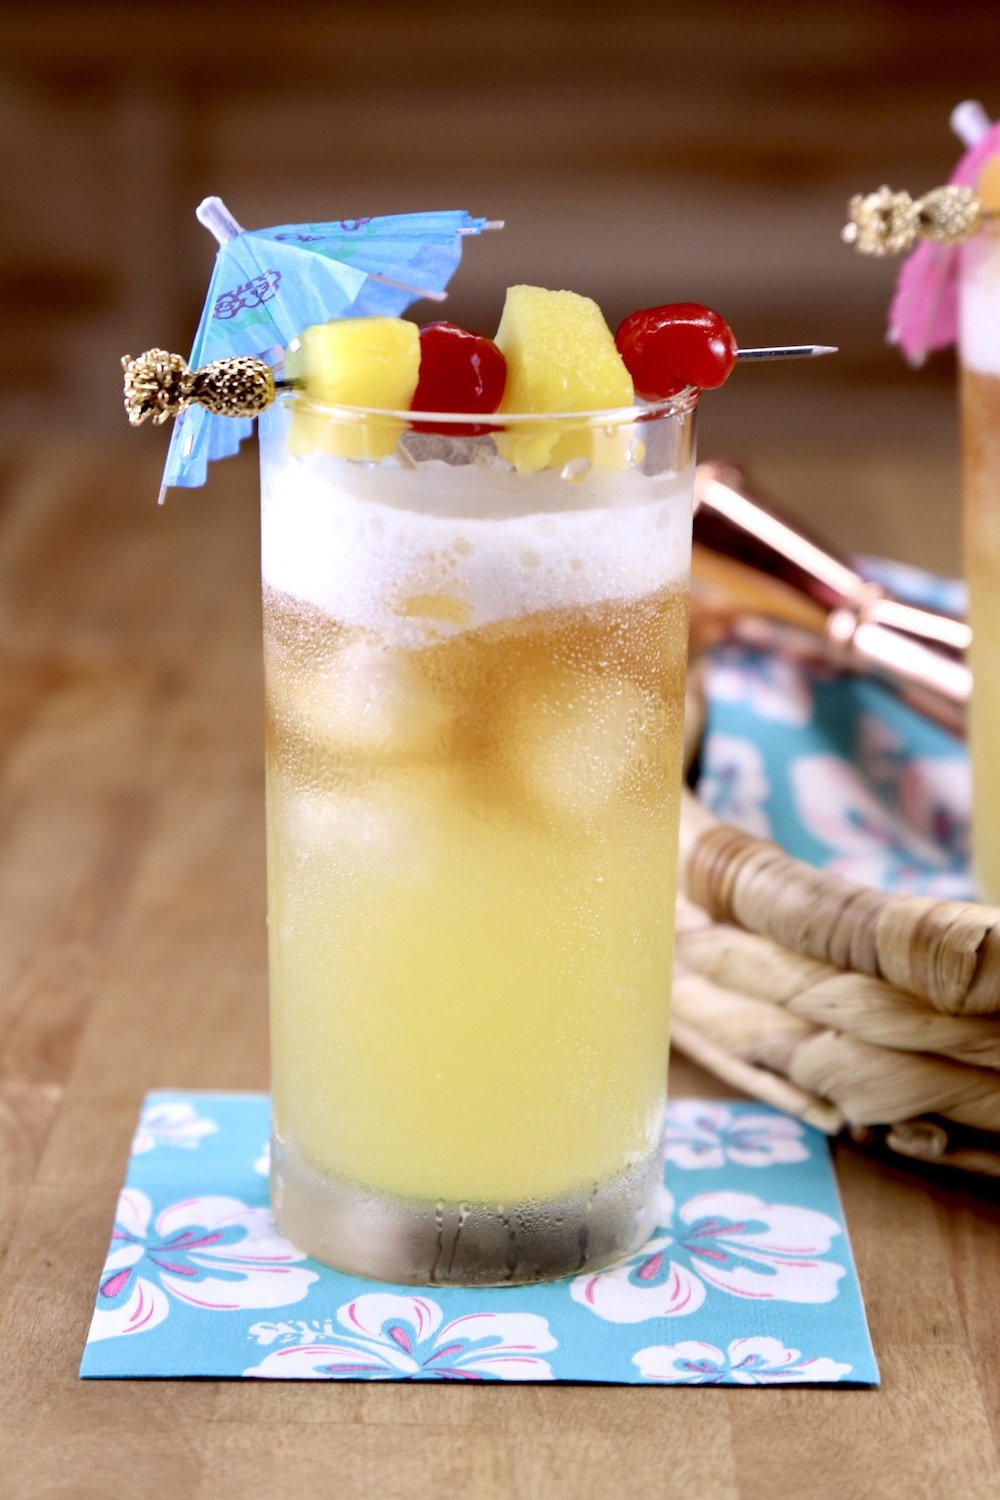 Pineapple Mai Tai drink with pineapple and cherry garnish